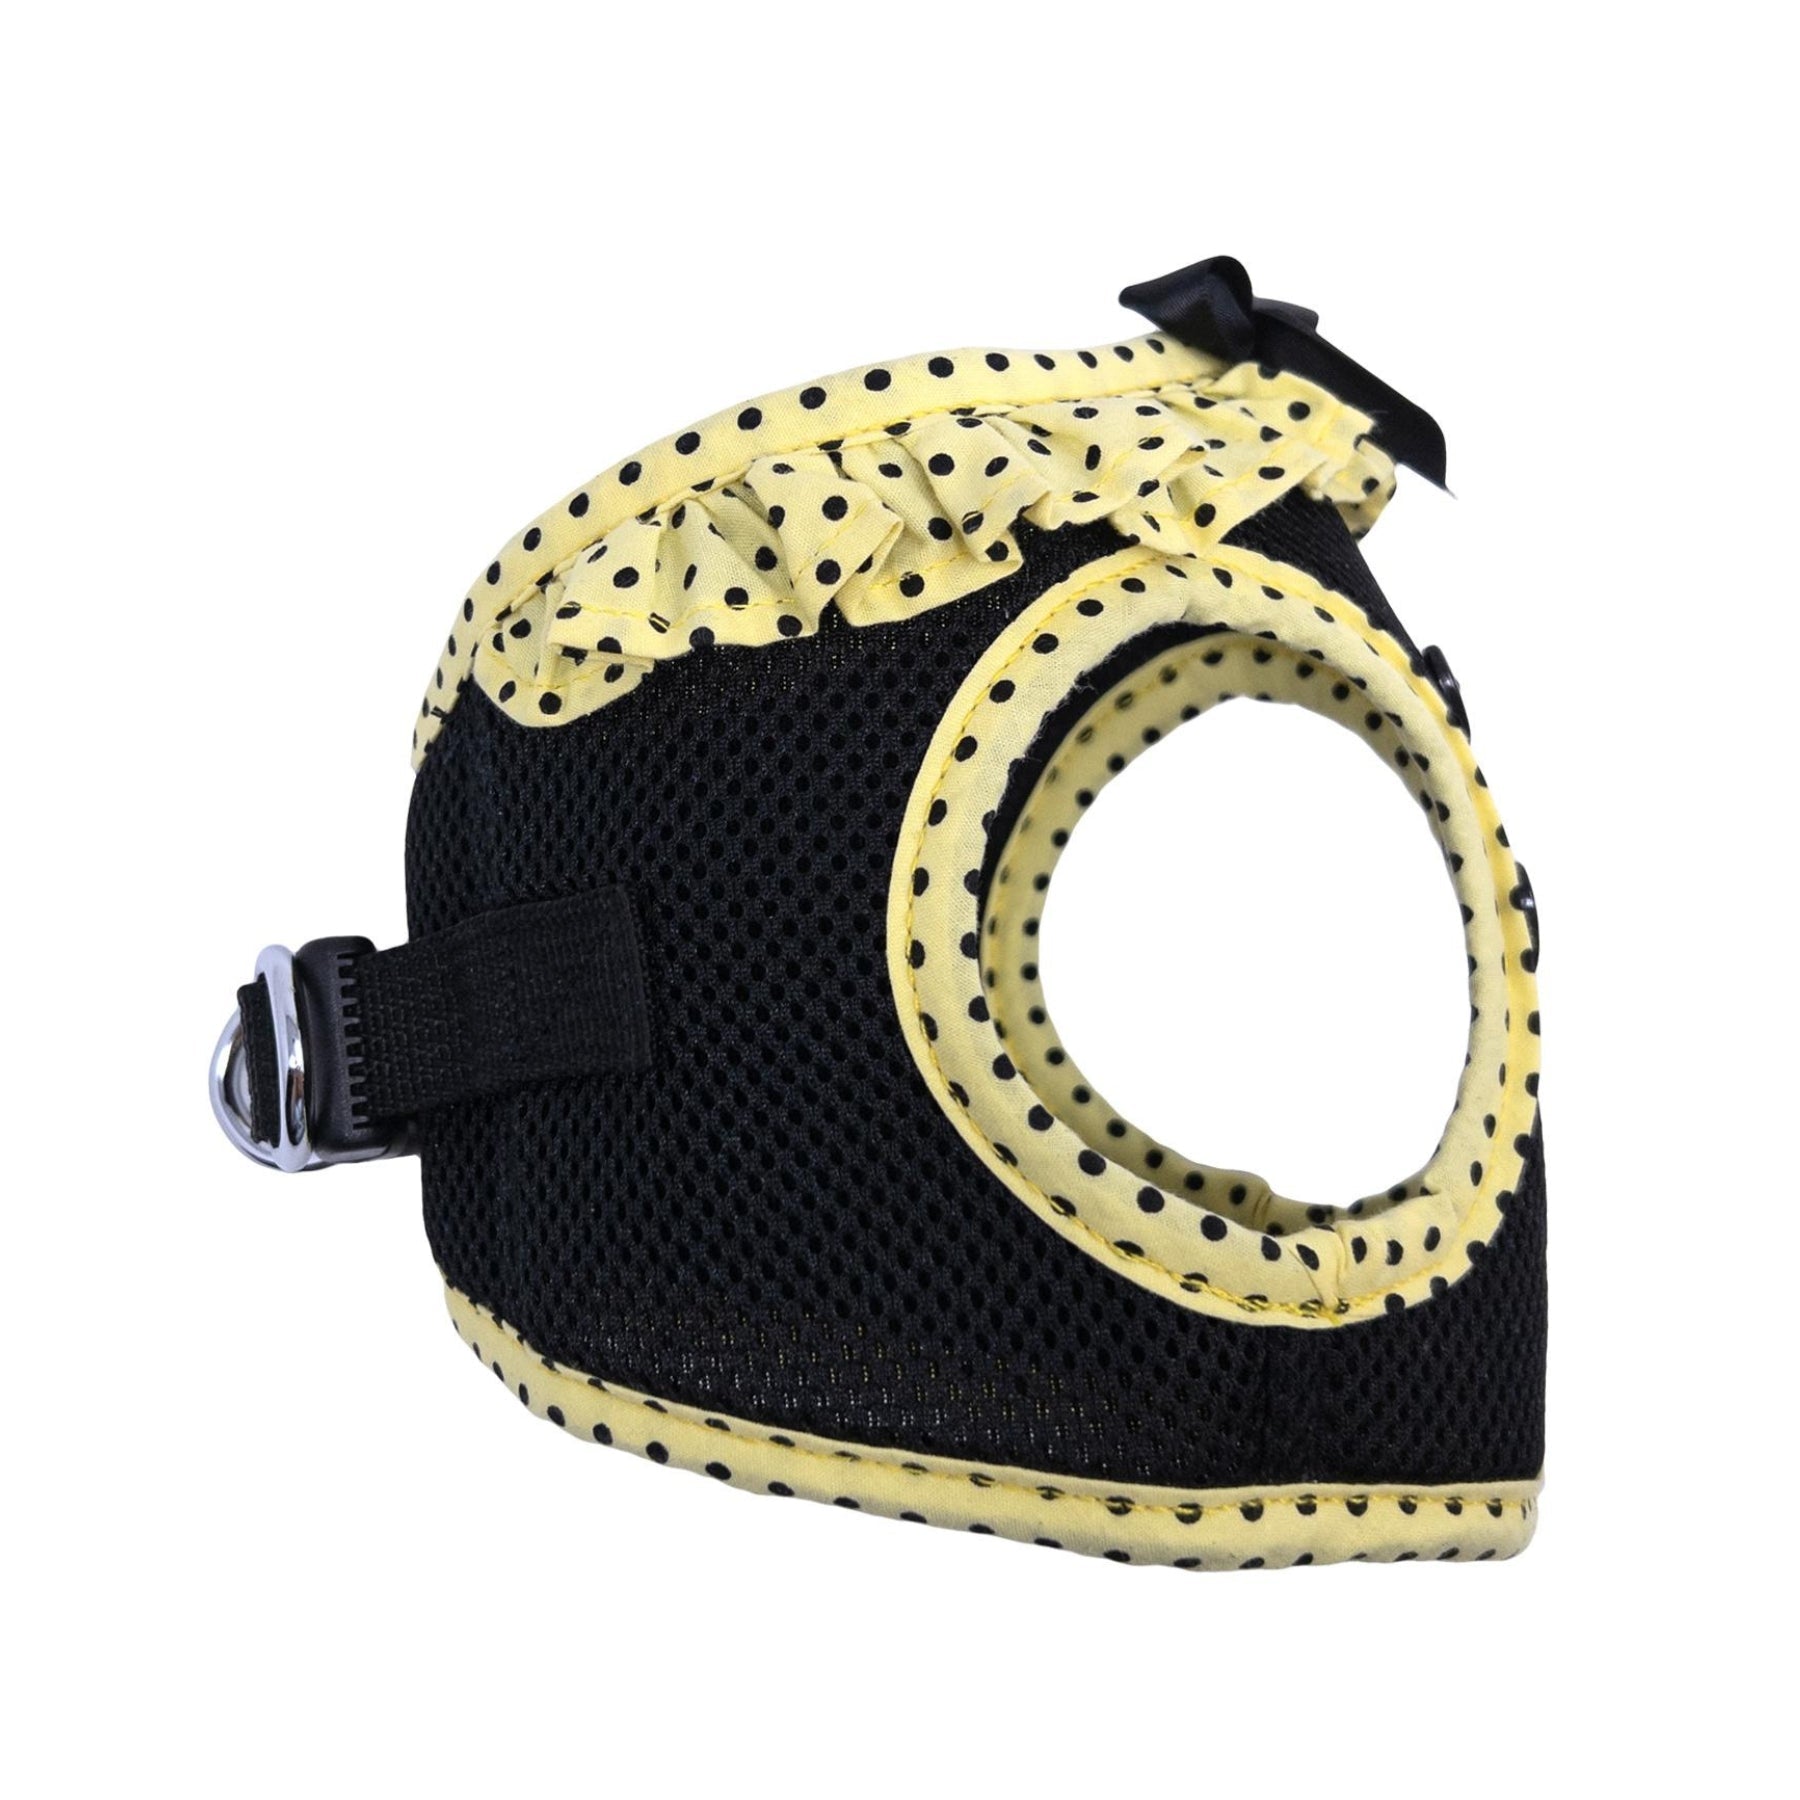 American River Choke Free Dog Harness - Yellow & Black Polka Dot - Pooch Luxury